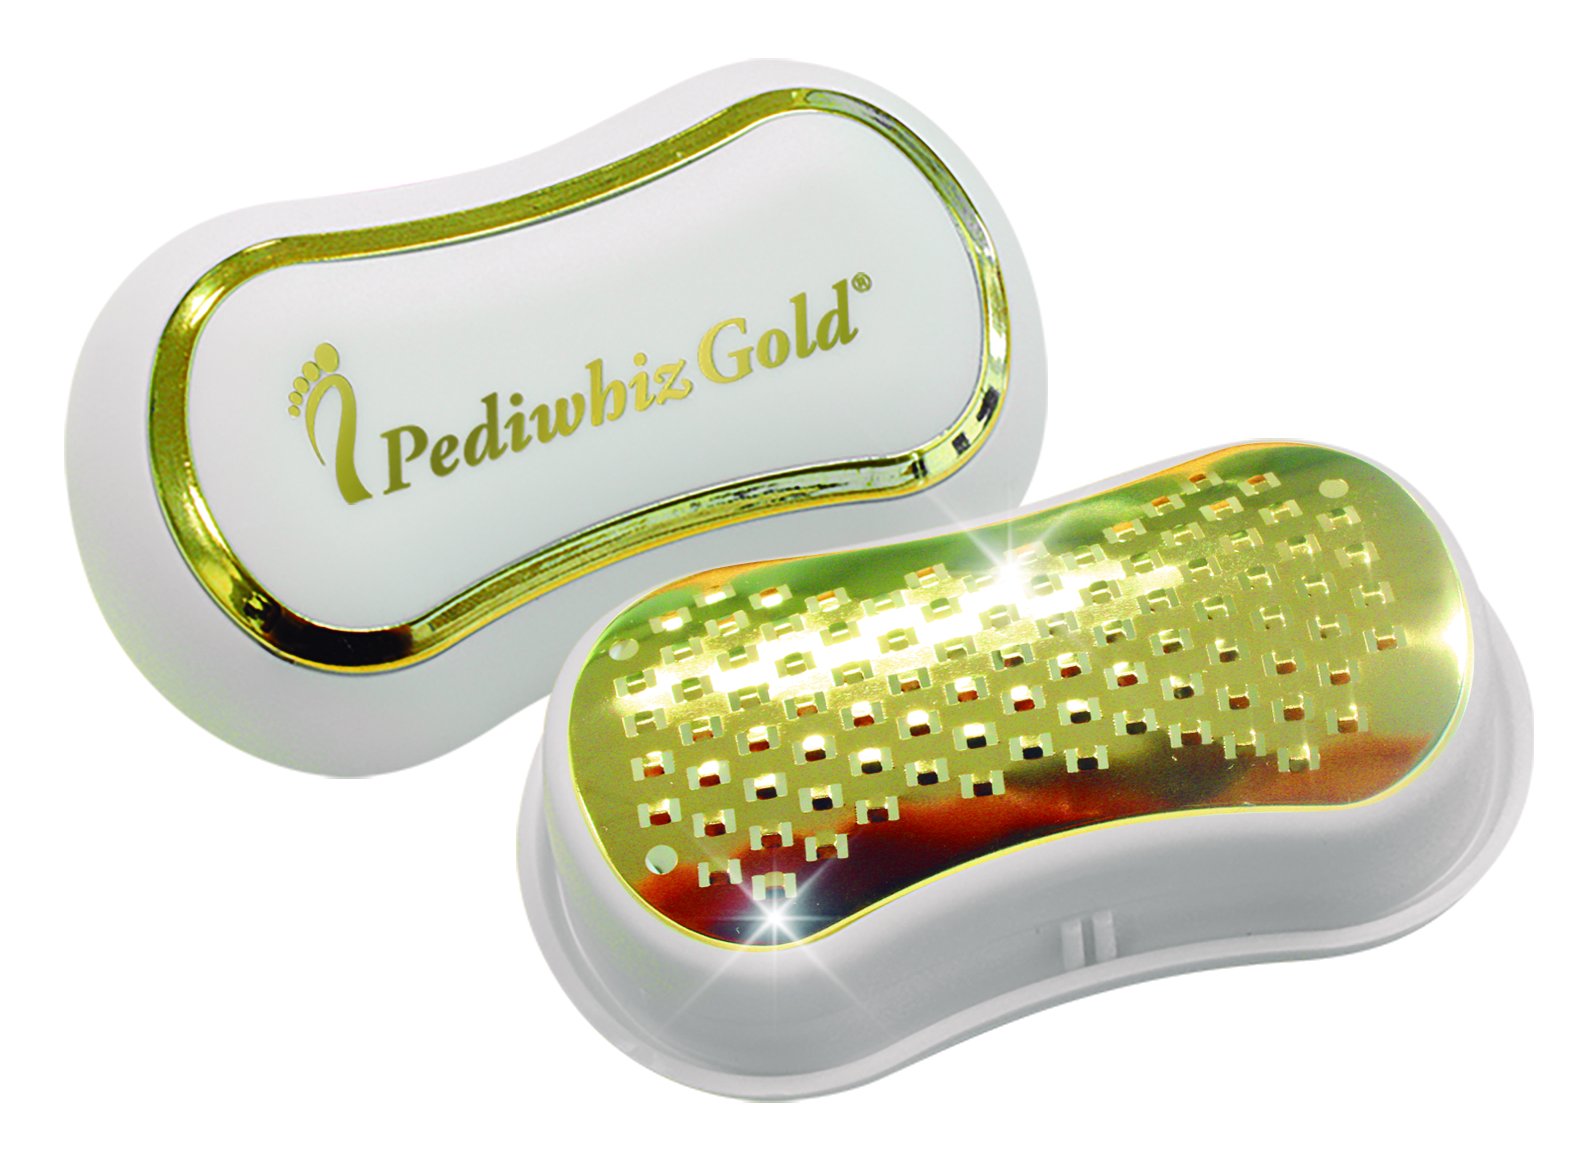 Pediwhiz Gold - the professional pedicure